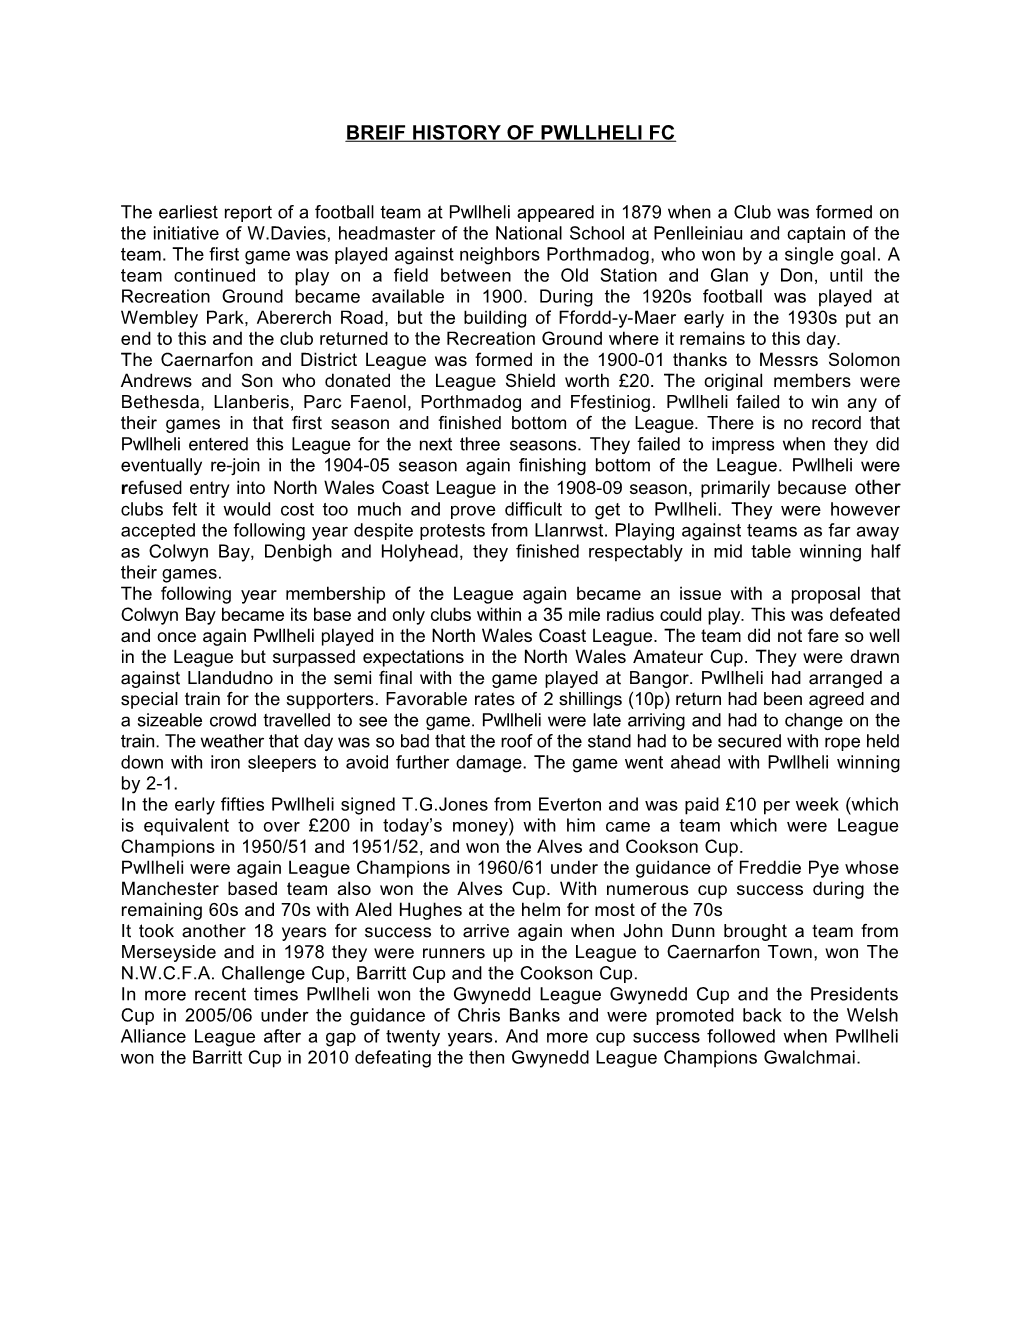 Breif History of Pwllheli Fc